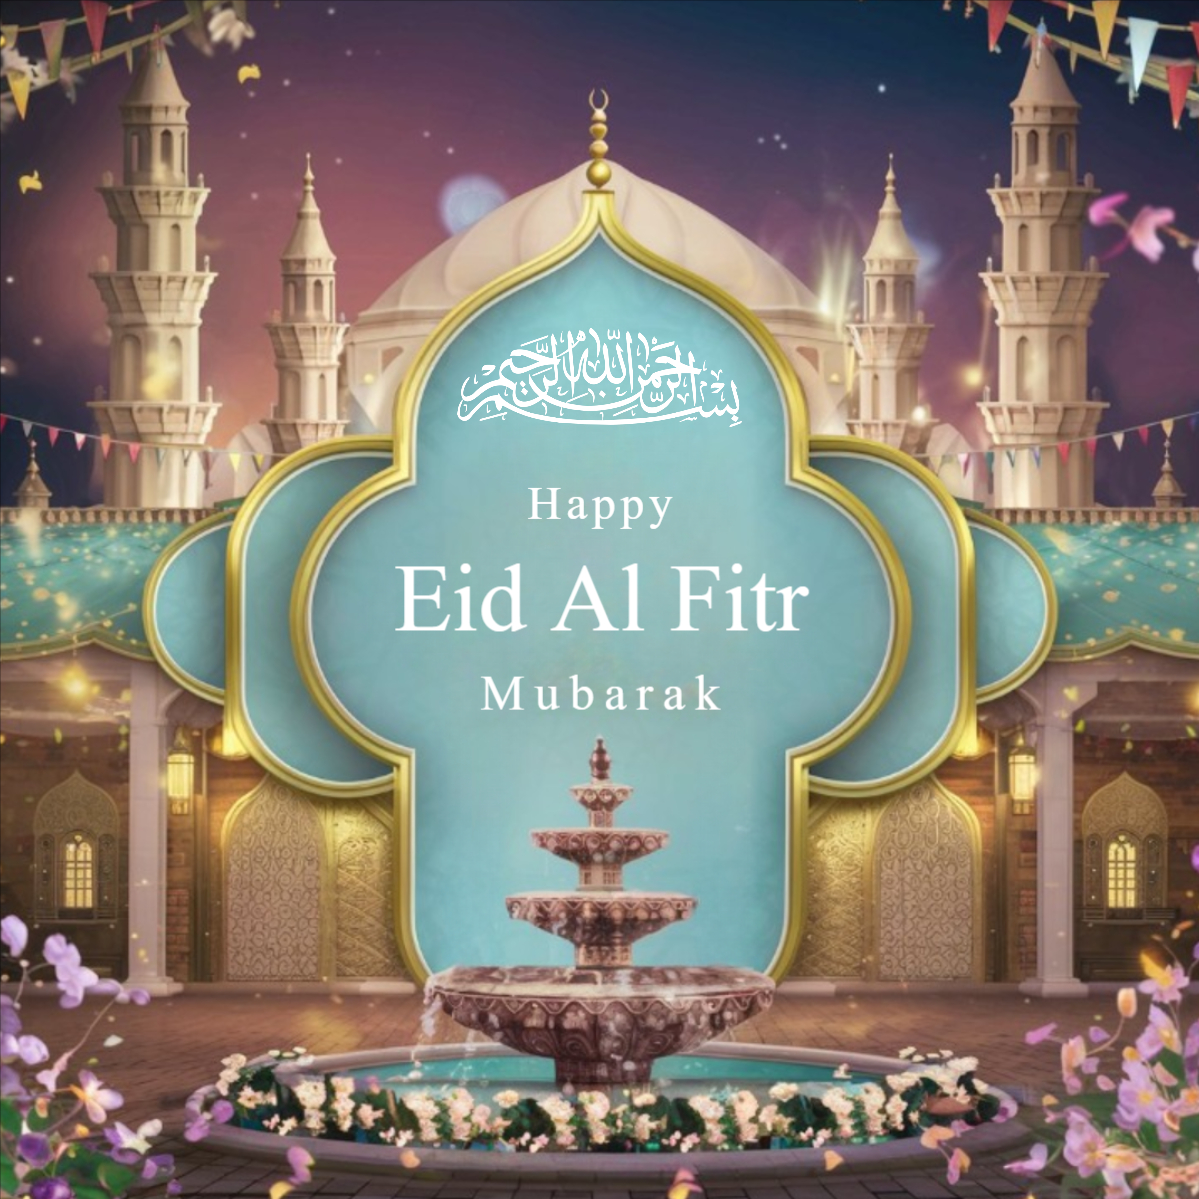 Happy Eid Al Fit Mubarak template design download for free